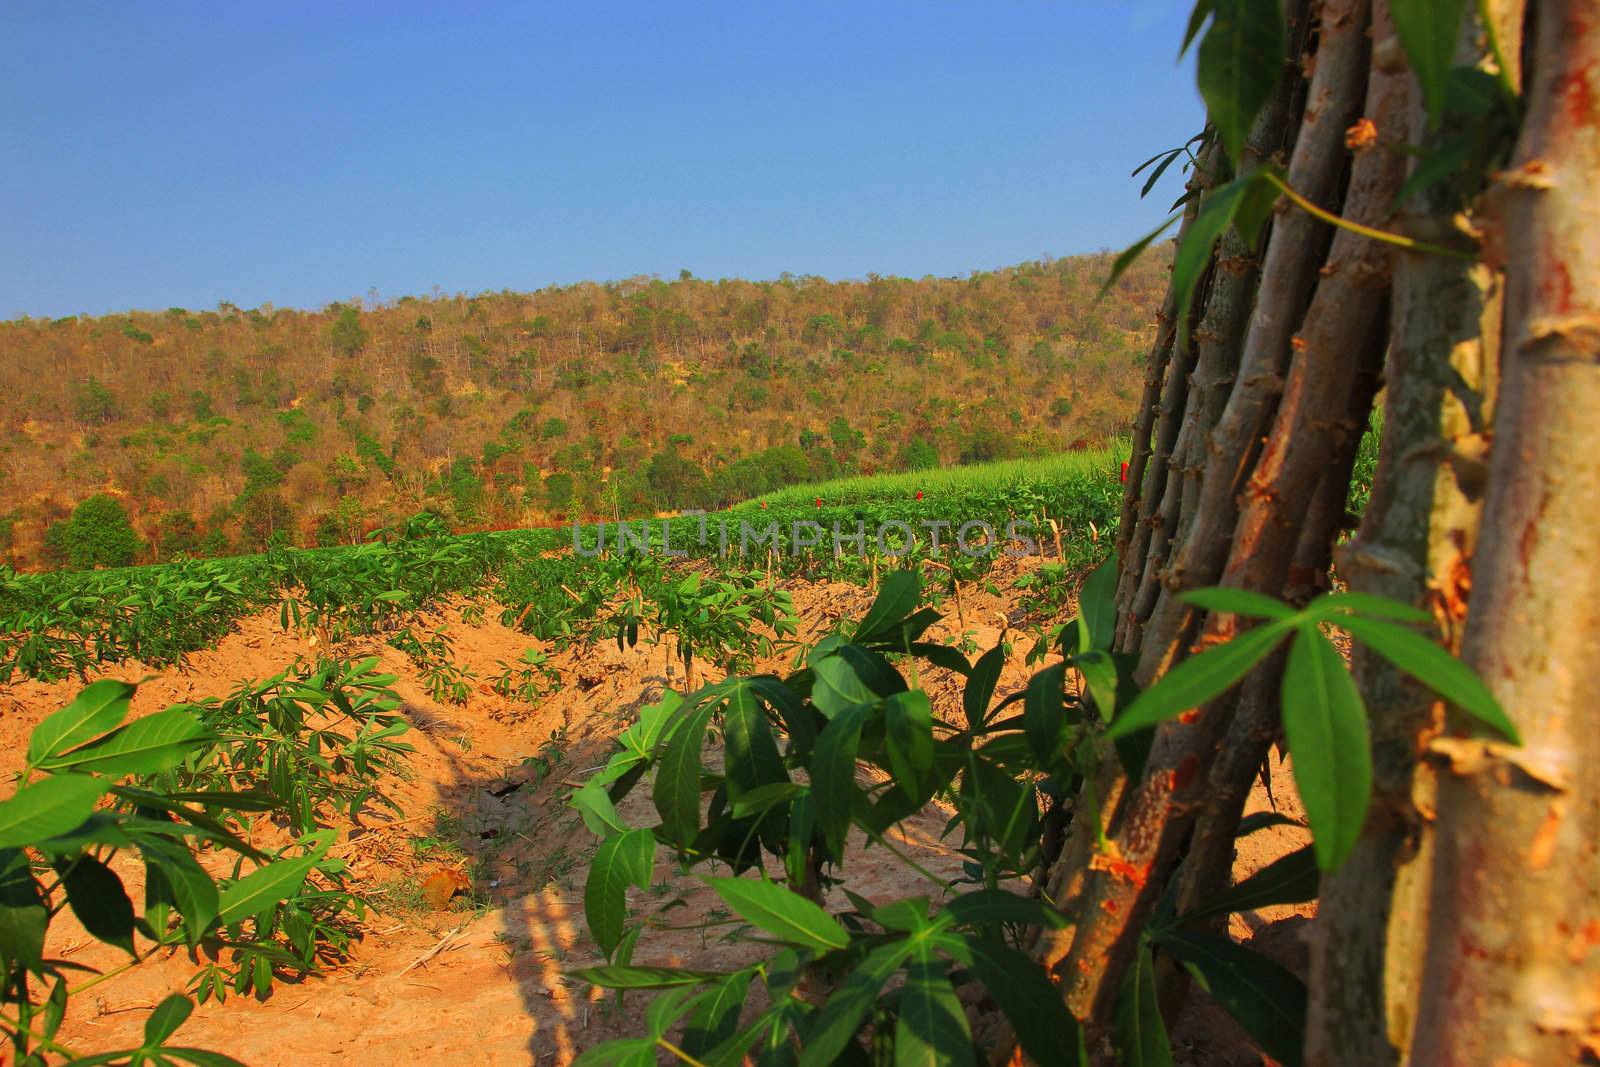 Cassava seedlings to coordinate the farm